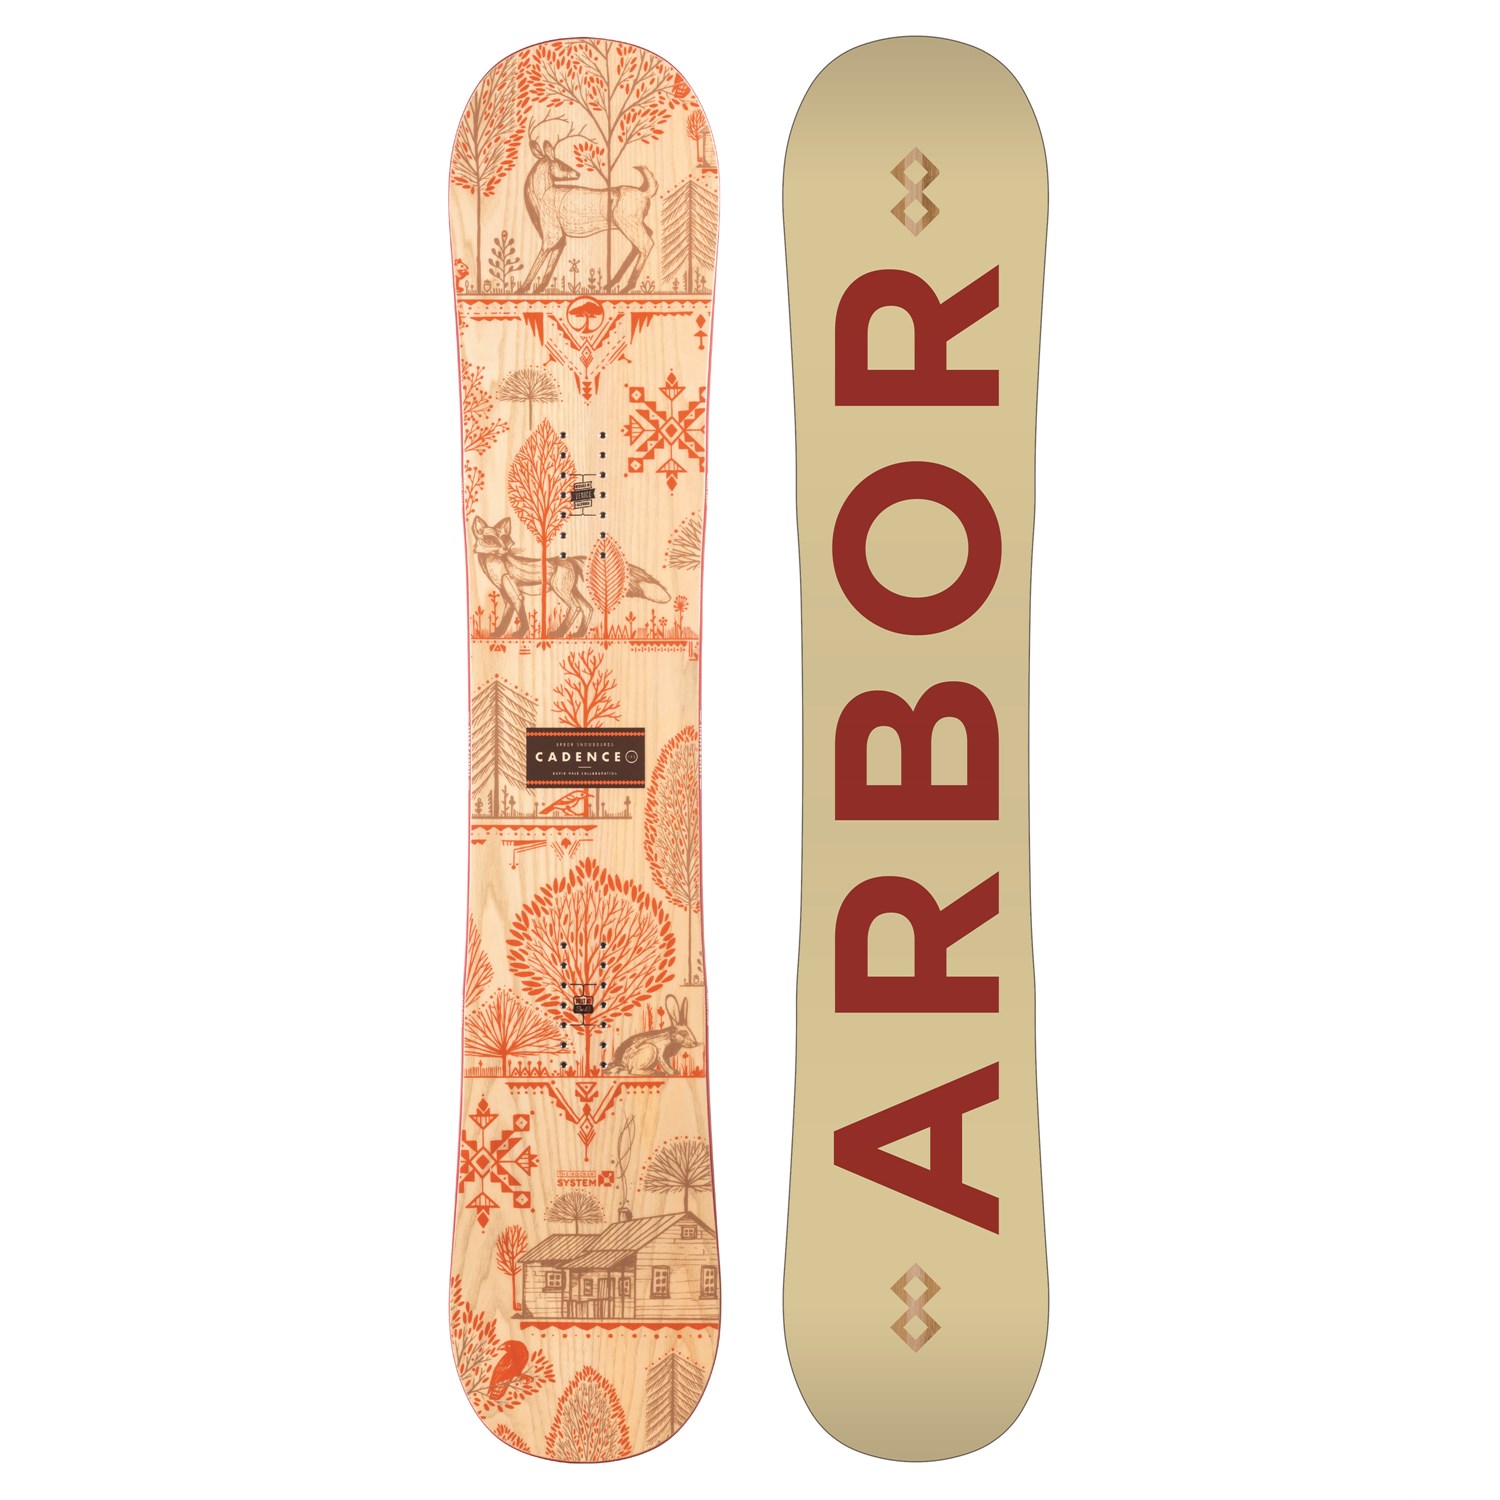 Arbor Cadence Snowboard 2016/2017. The Best Women’s Snowboard Designs